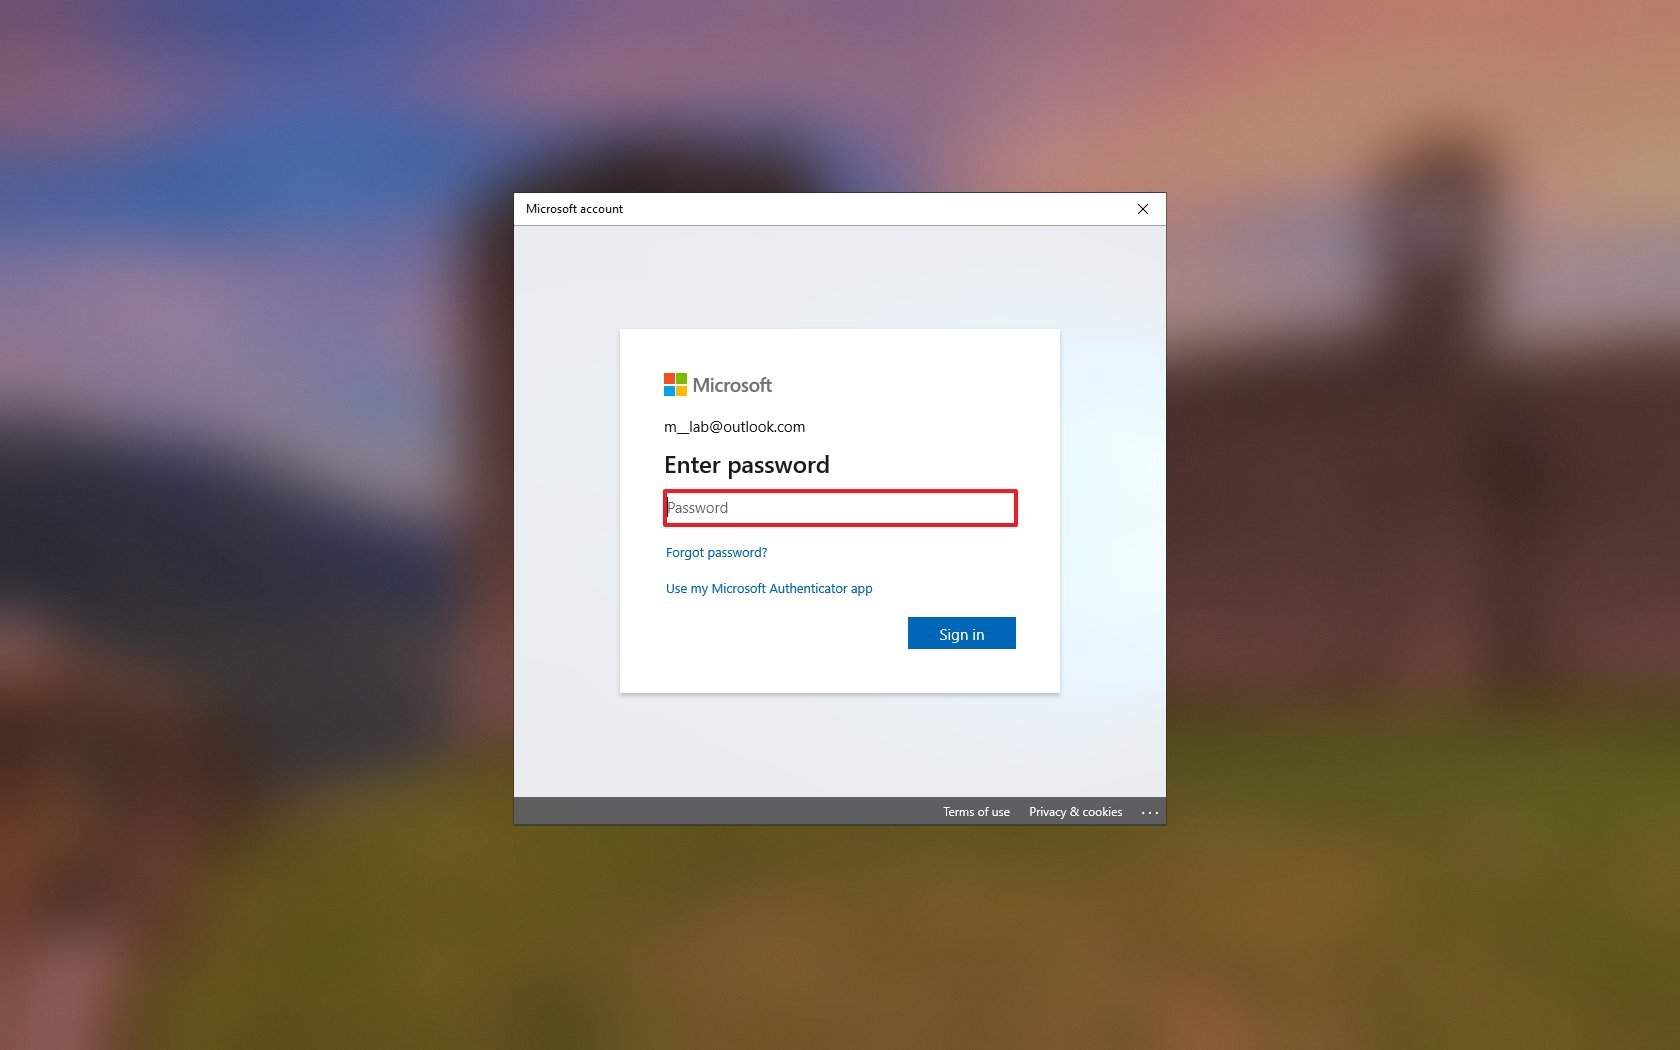 Windows 10 sign-in screen confirm account password